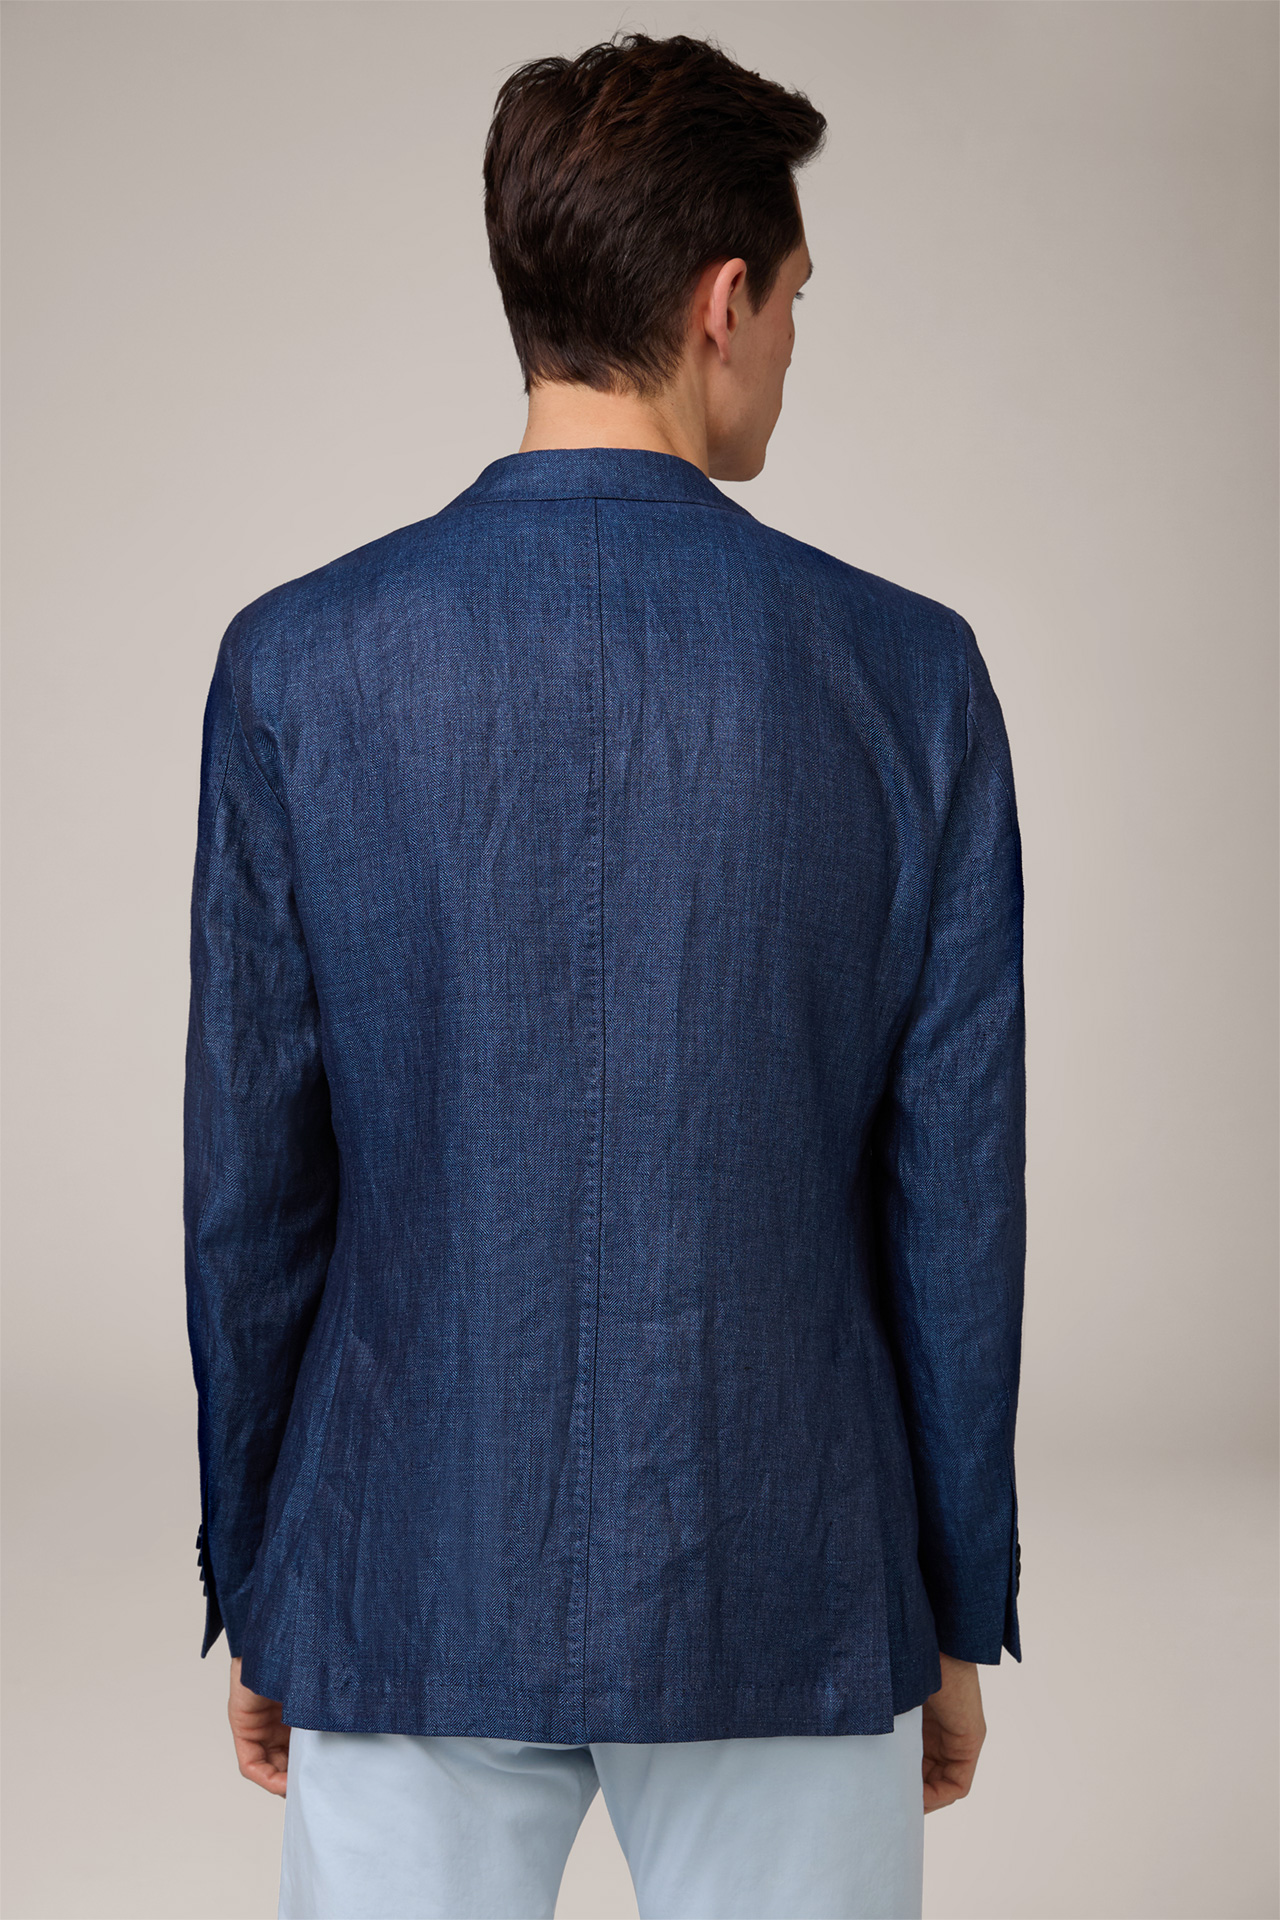 Giro Herringbone Linen Jacket in Blue